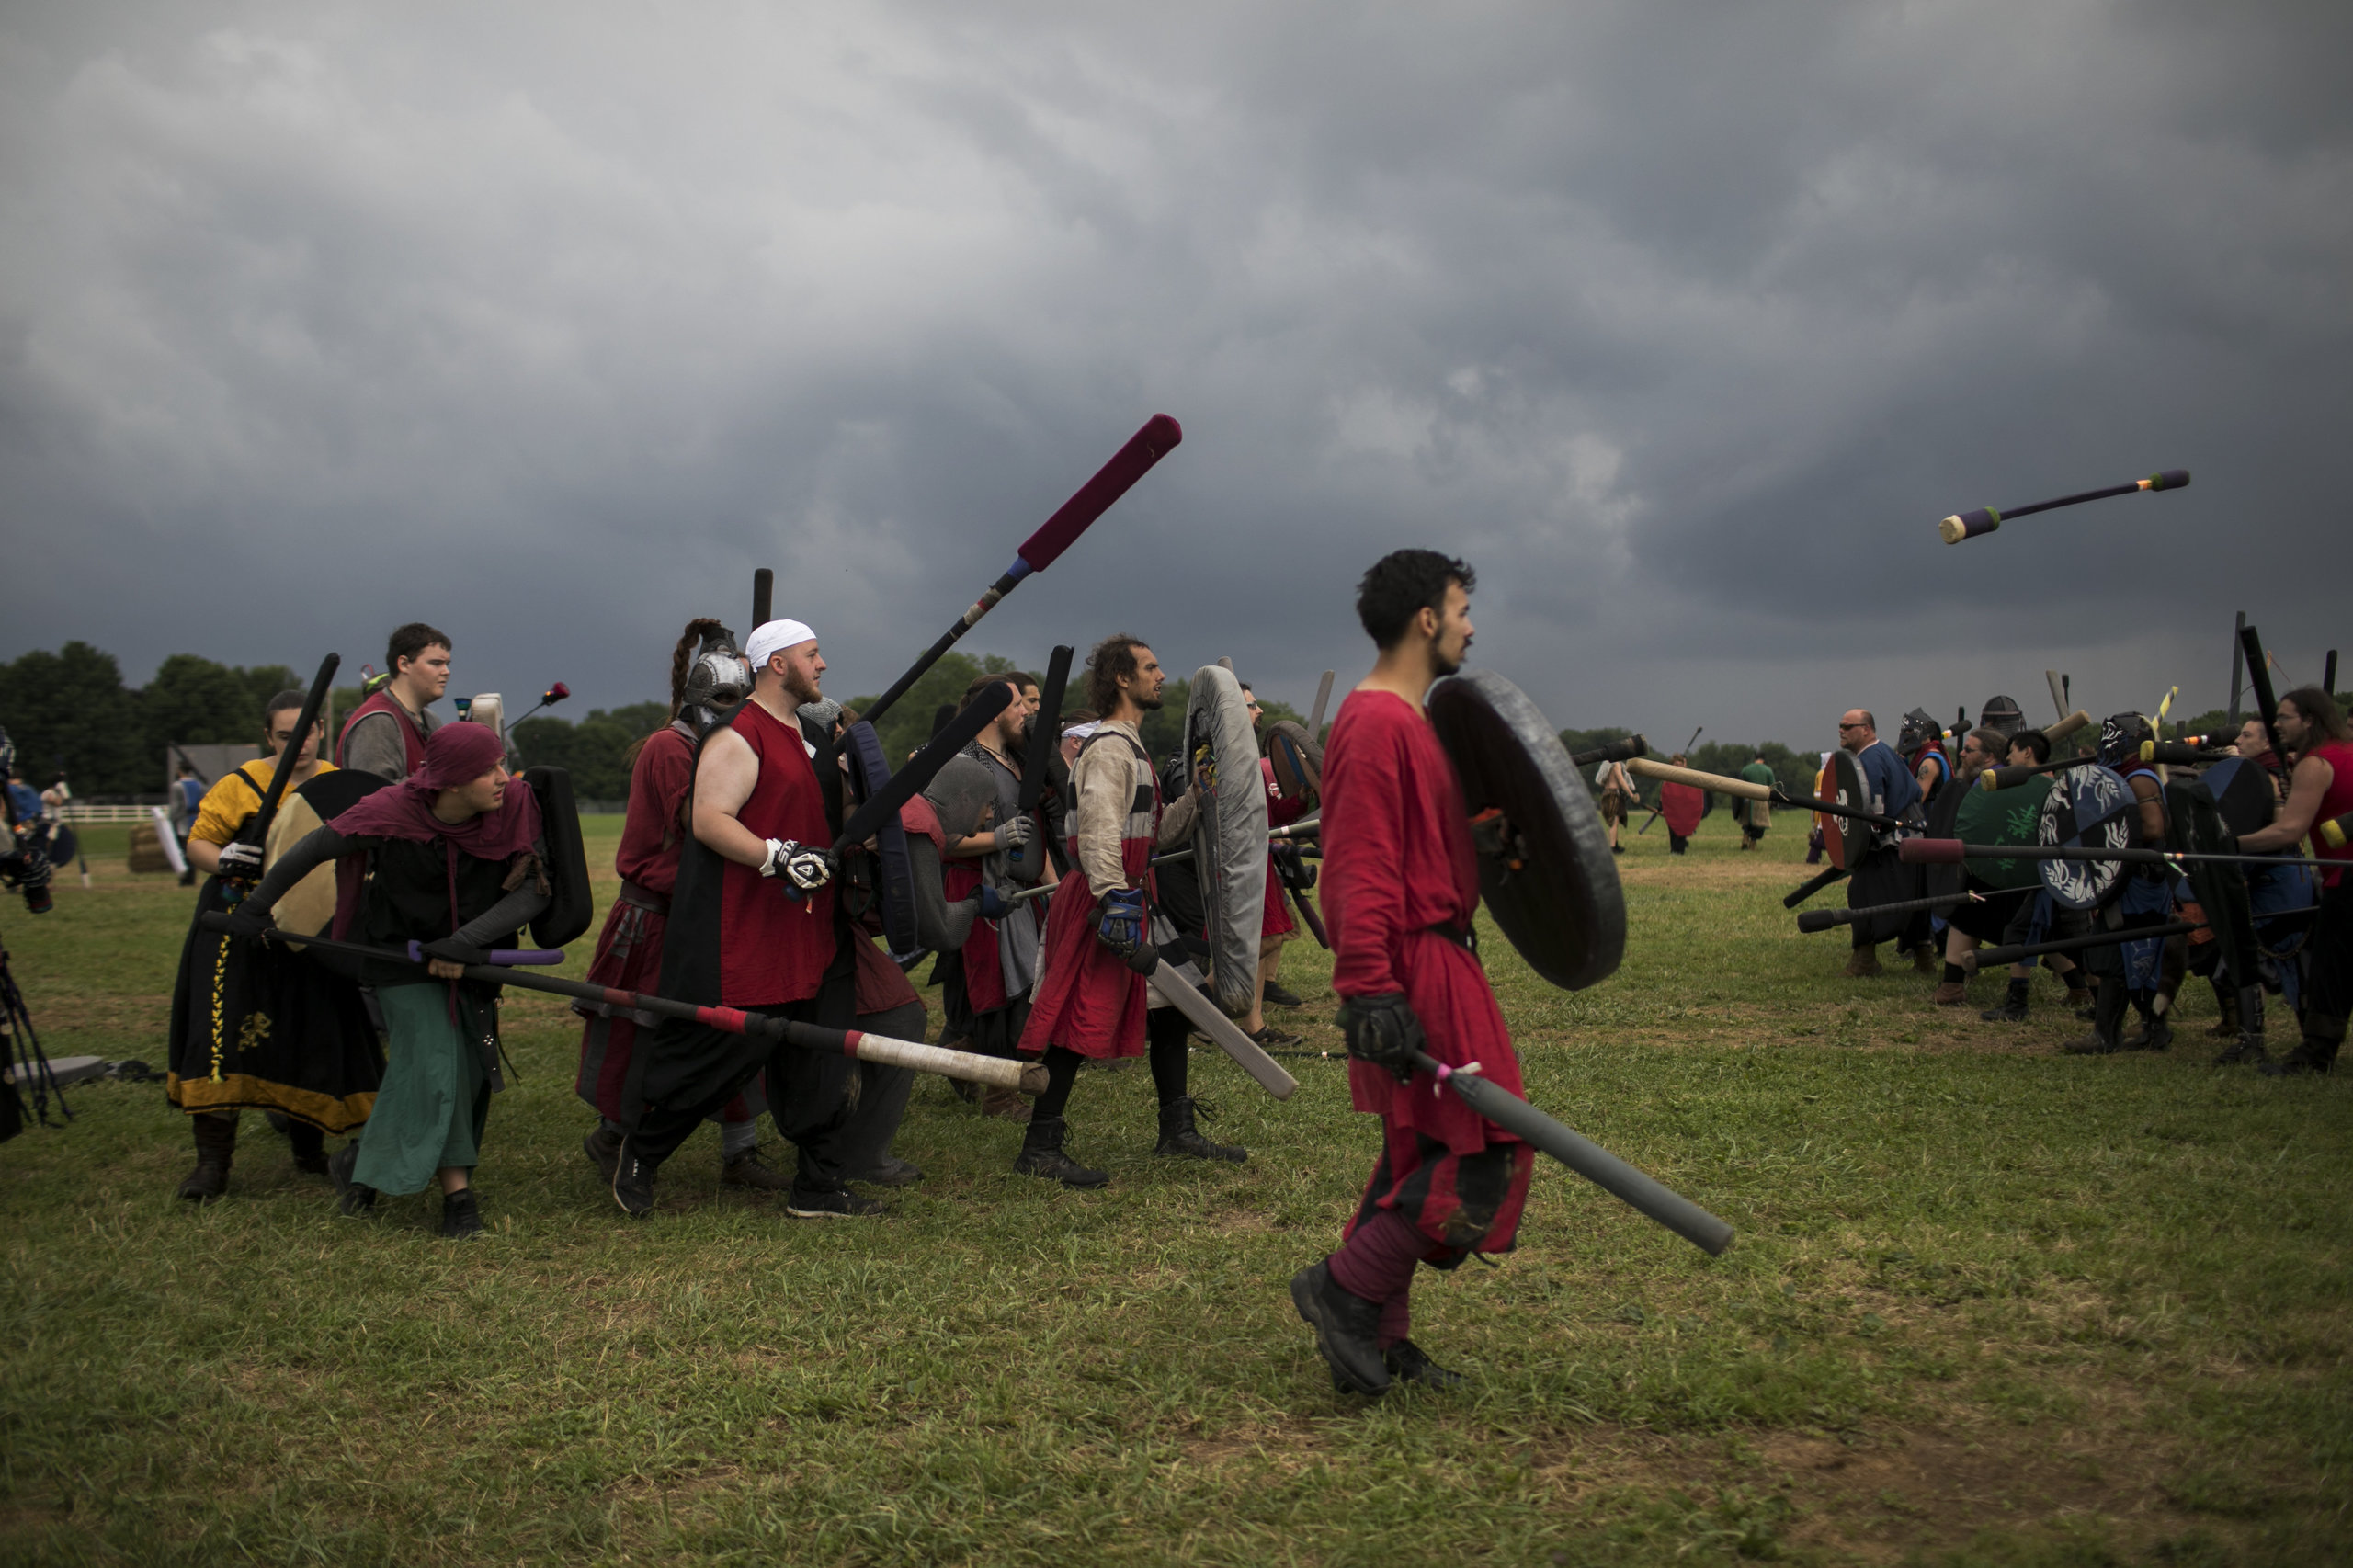 Dagorhirrim battle at Ragnarok, an annual live action roleplay battle in Slippery Rock, Pennsylvania.